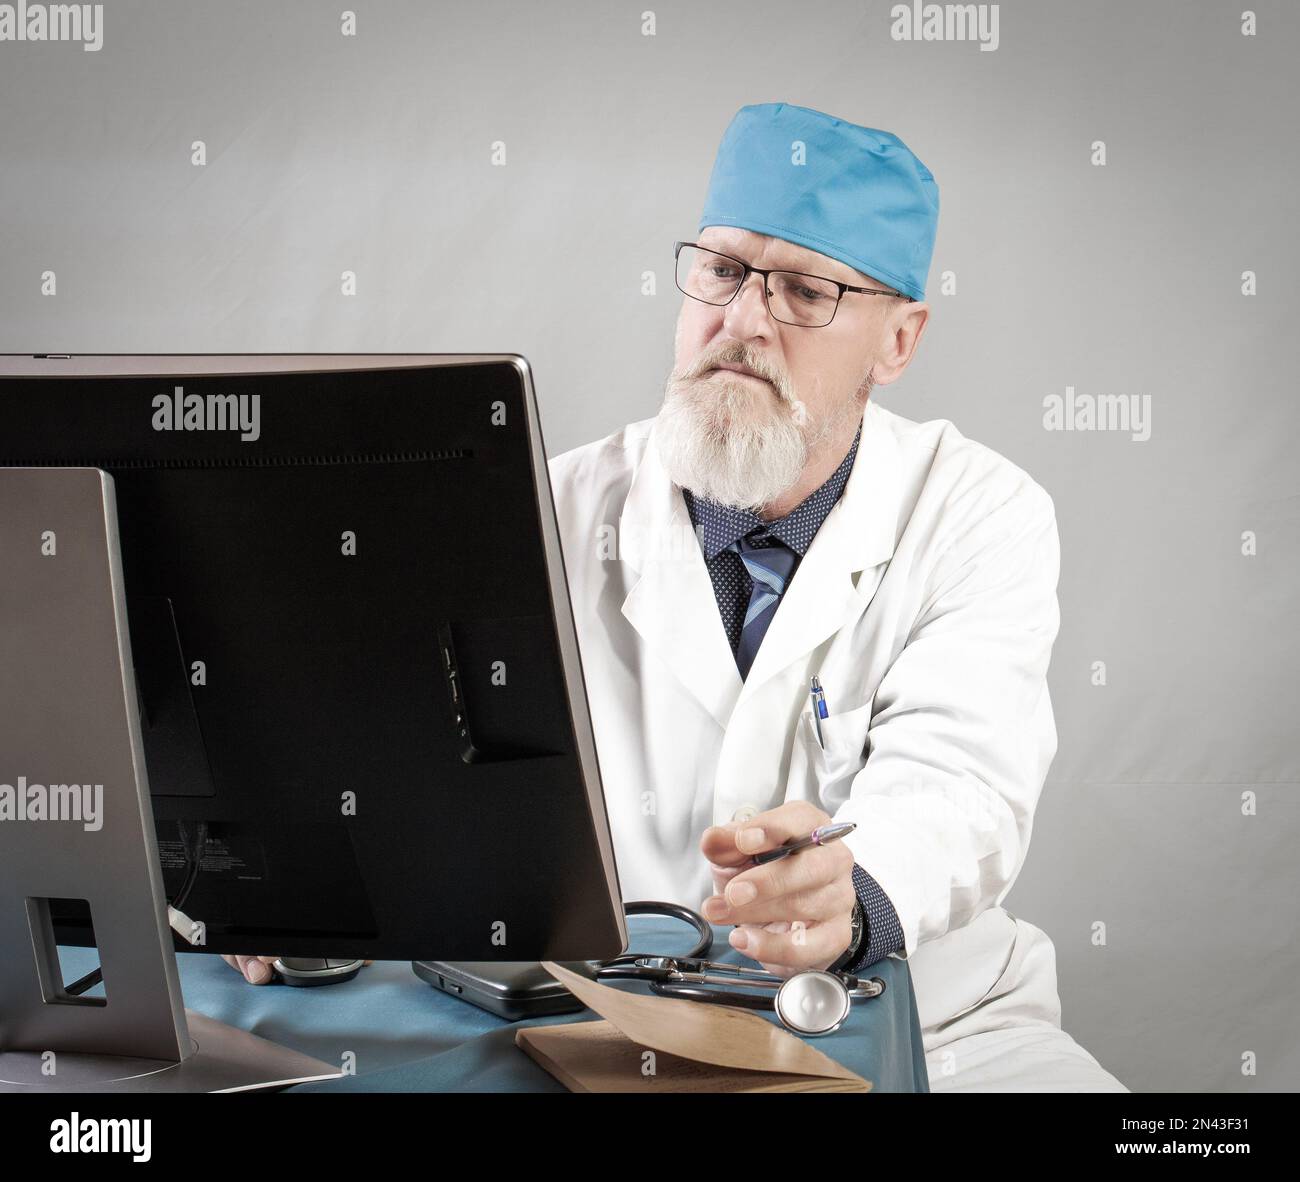 Photo of elderly doctor using prescription laptop, glasses, expert, uniform isolated on gray background. Stock Photo